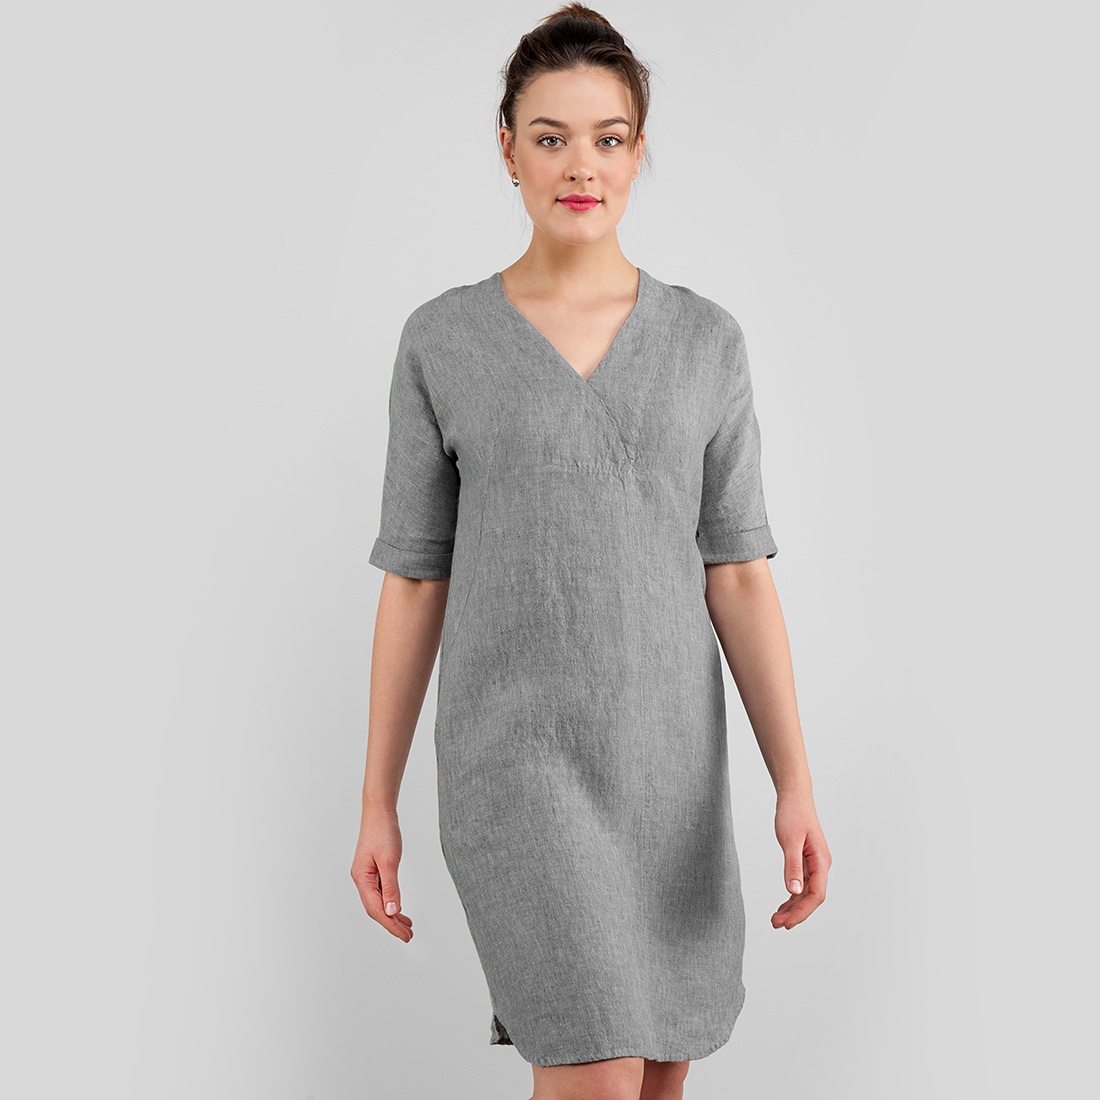 Linen dress in grey color. Manufacturer: AB “Siulas”